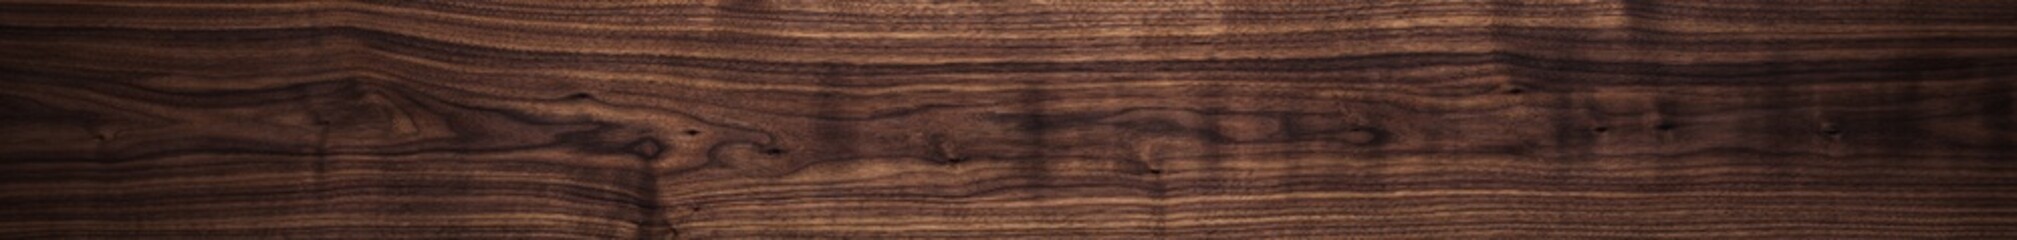 Walnut wood texture. Super long walnut planks texture background.Texture element	
